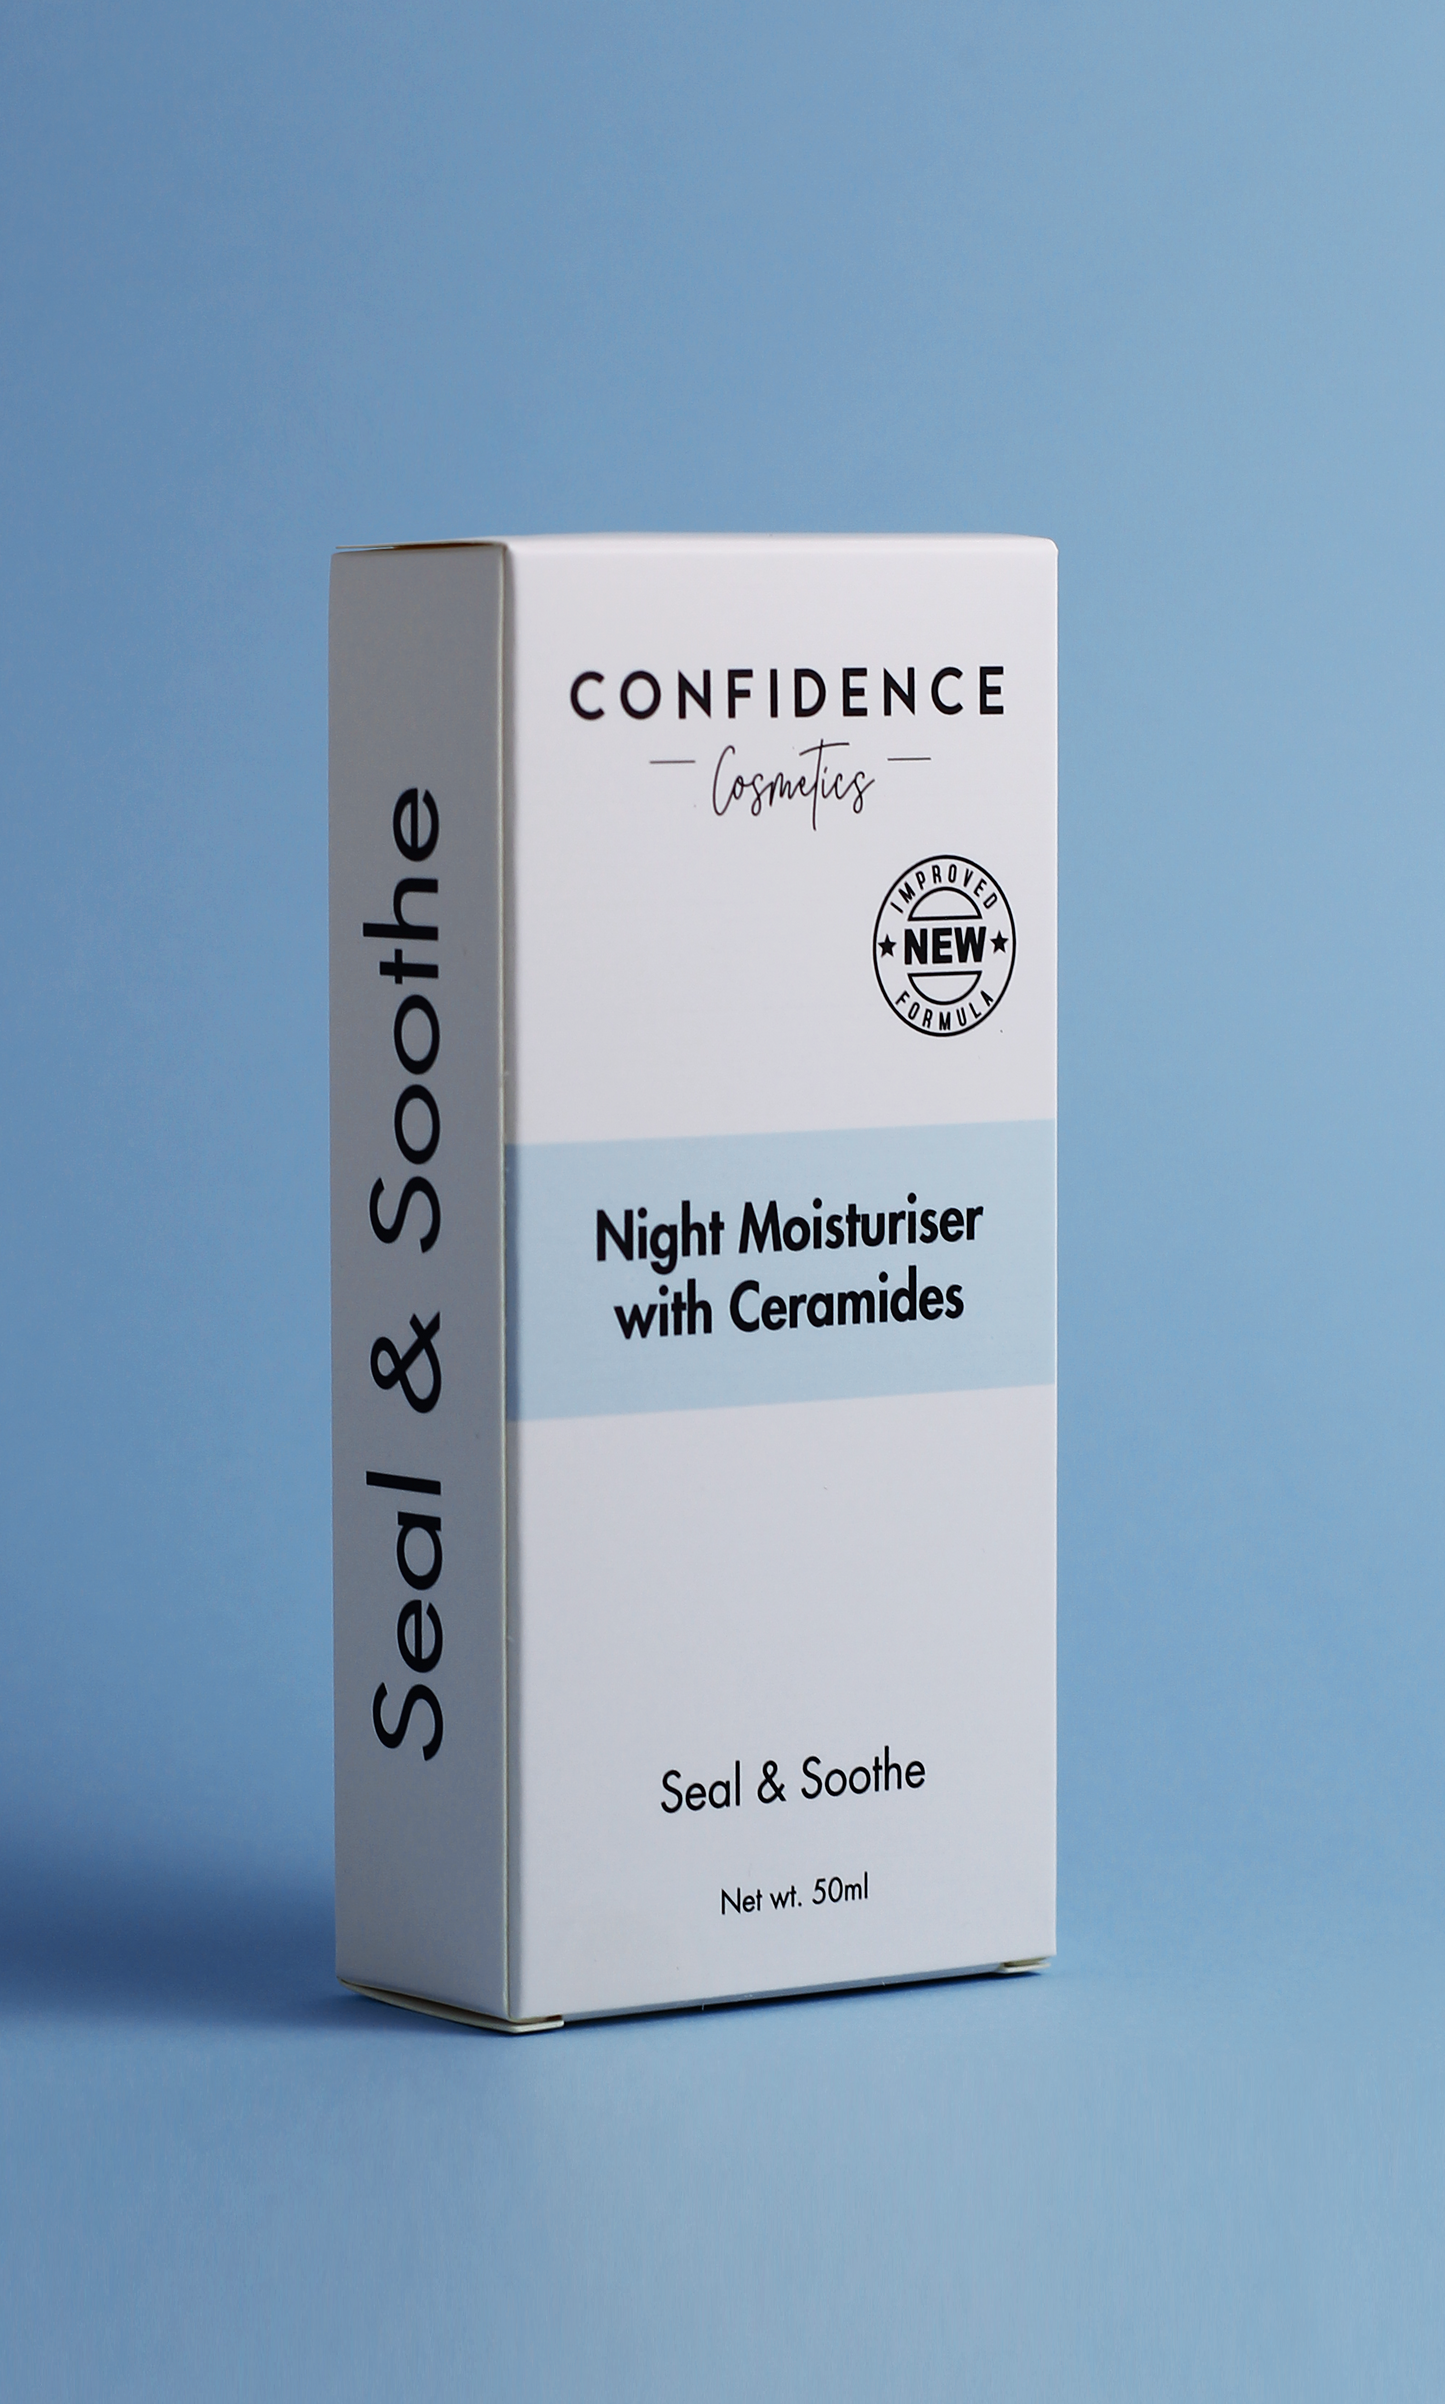 (New Formulation) Seal & Soothe Night Moisturiser with Ceramides